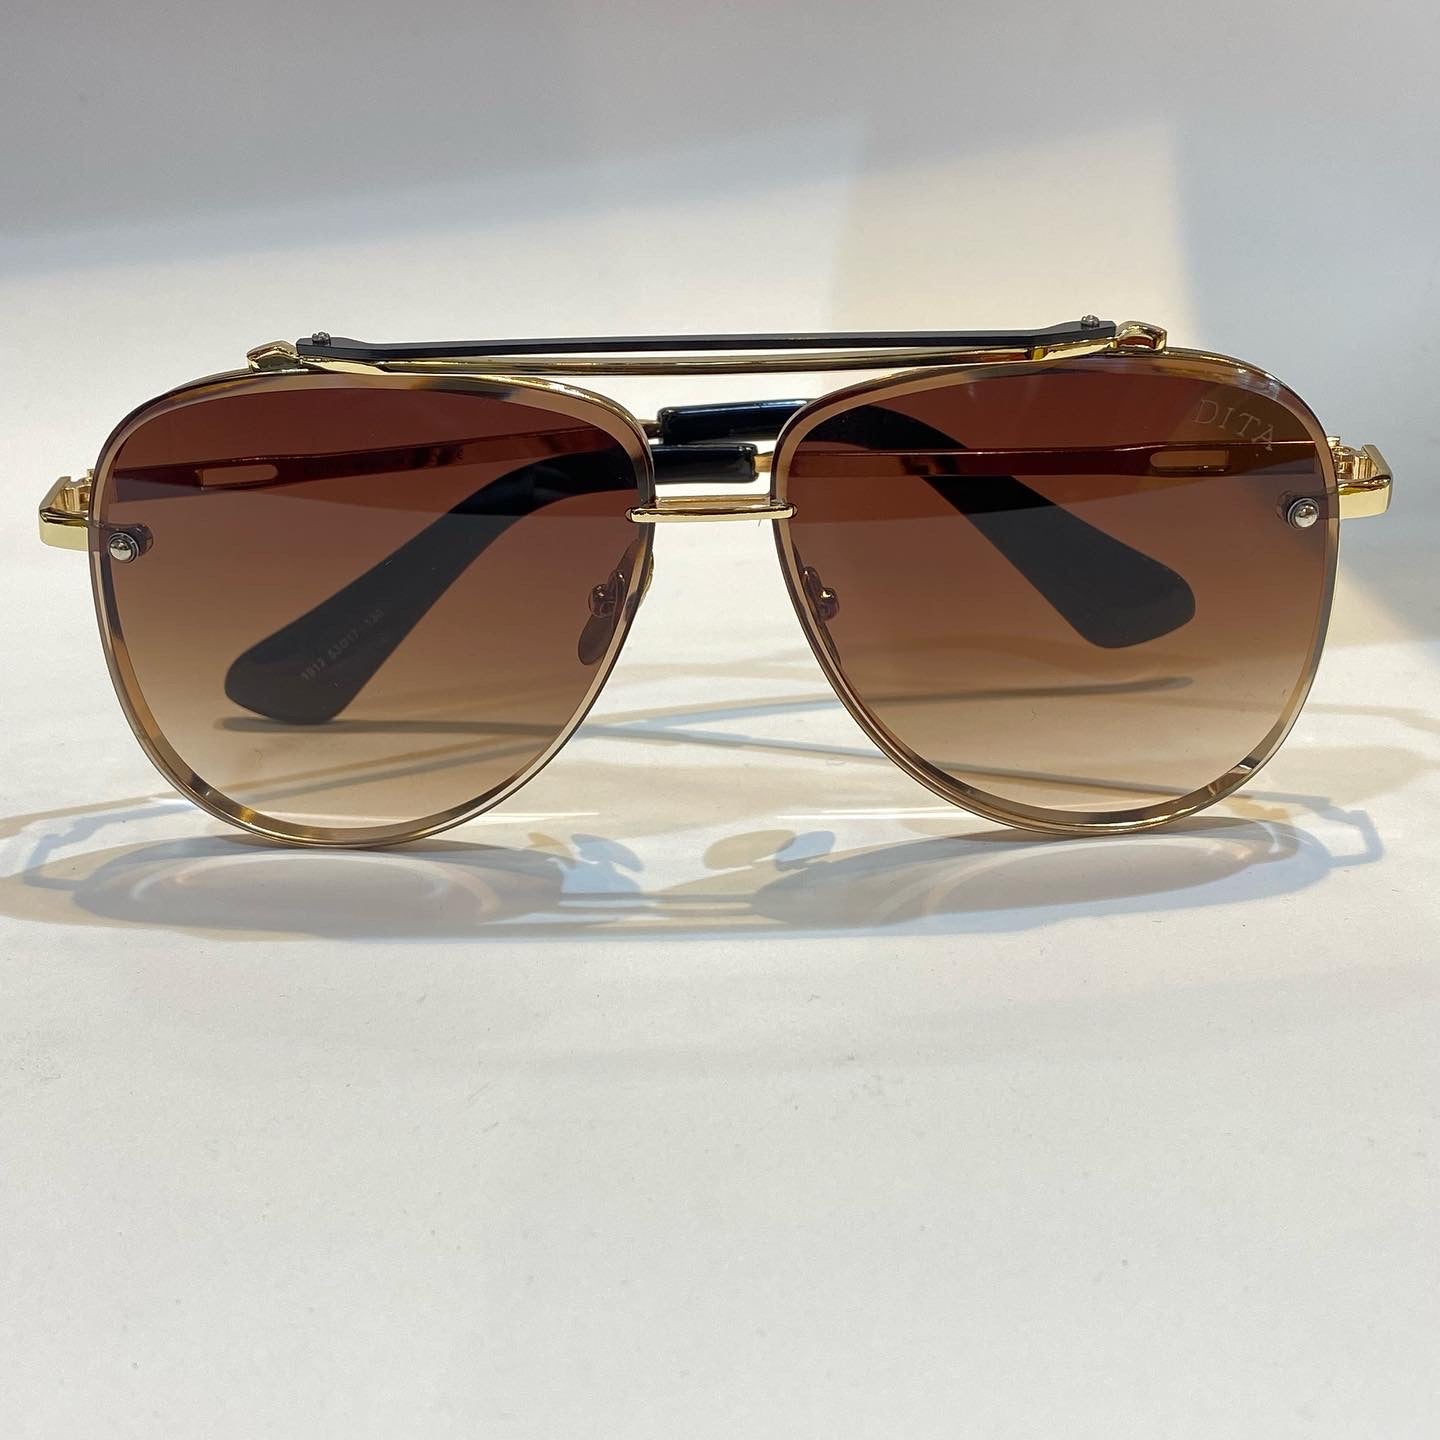 TID Gold Frame Browm Shade Unisex Branded Sunglasses 1912 53 17-139